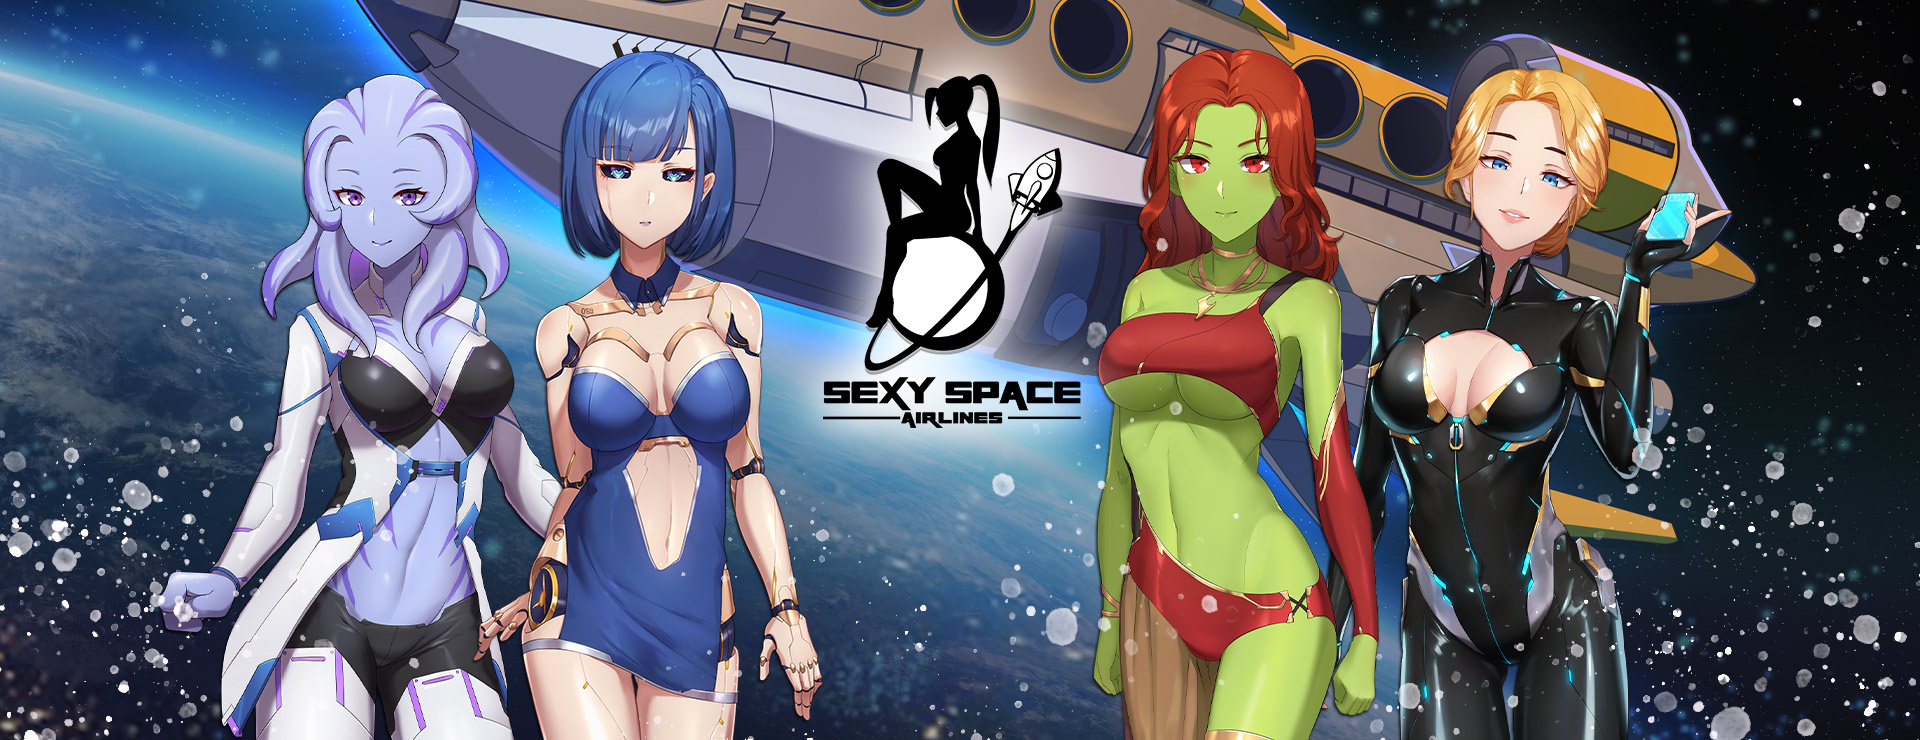 Sexy Space Airlines Game - Aventura Acción Juego